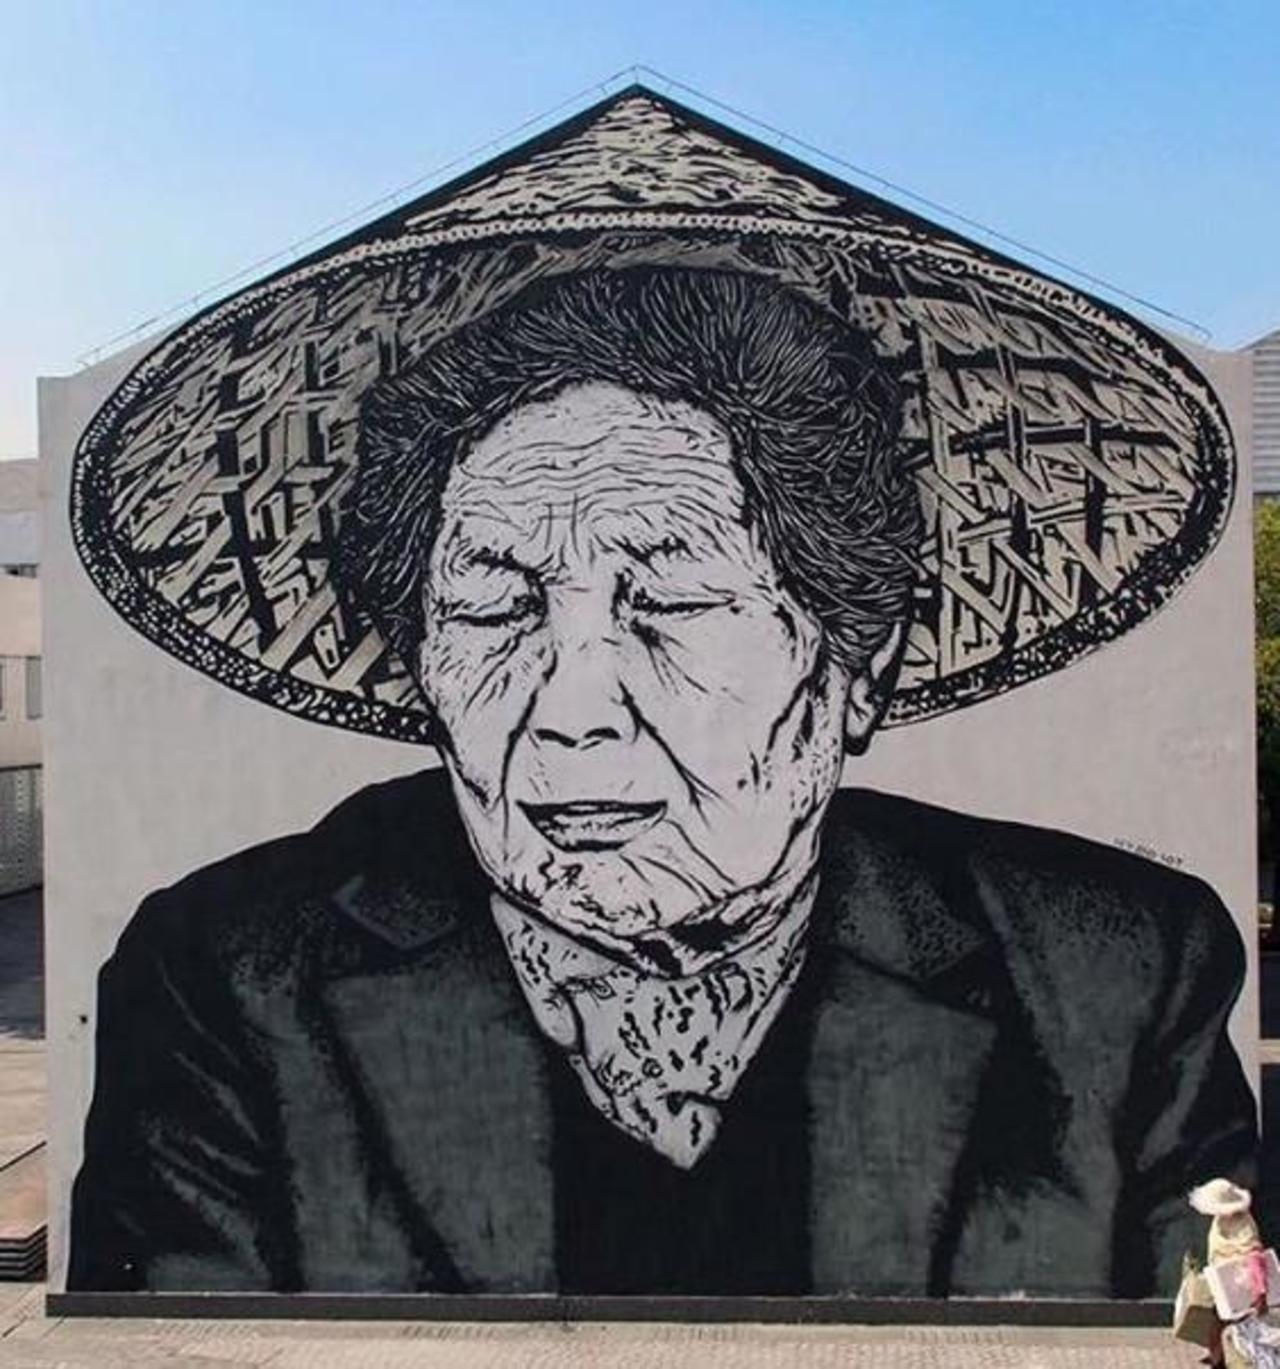 ... #Shanghai #China 
by #Icy & #Sot ()
#streetart #graffiti #art https://t.co/NklNz1sNAw